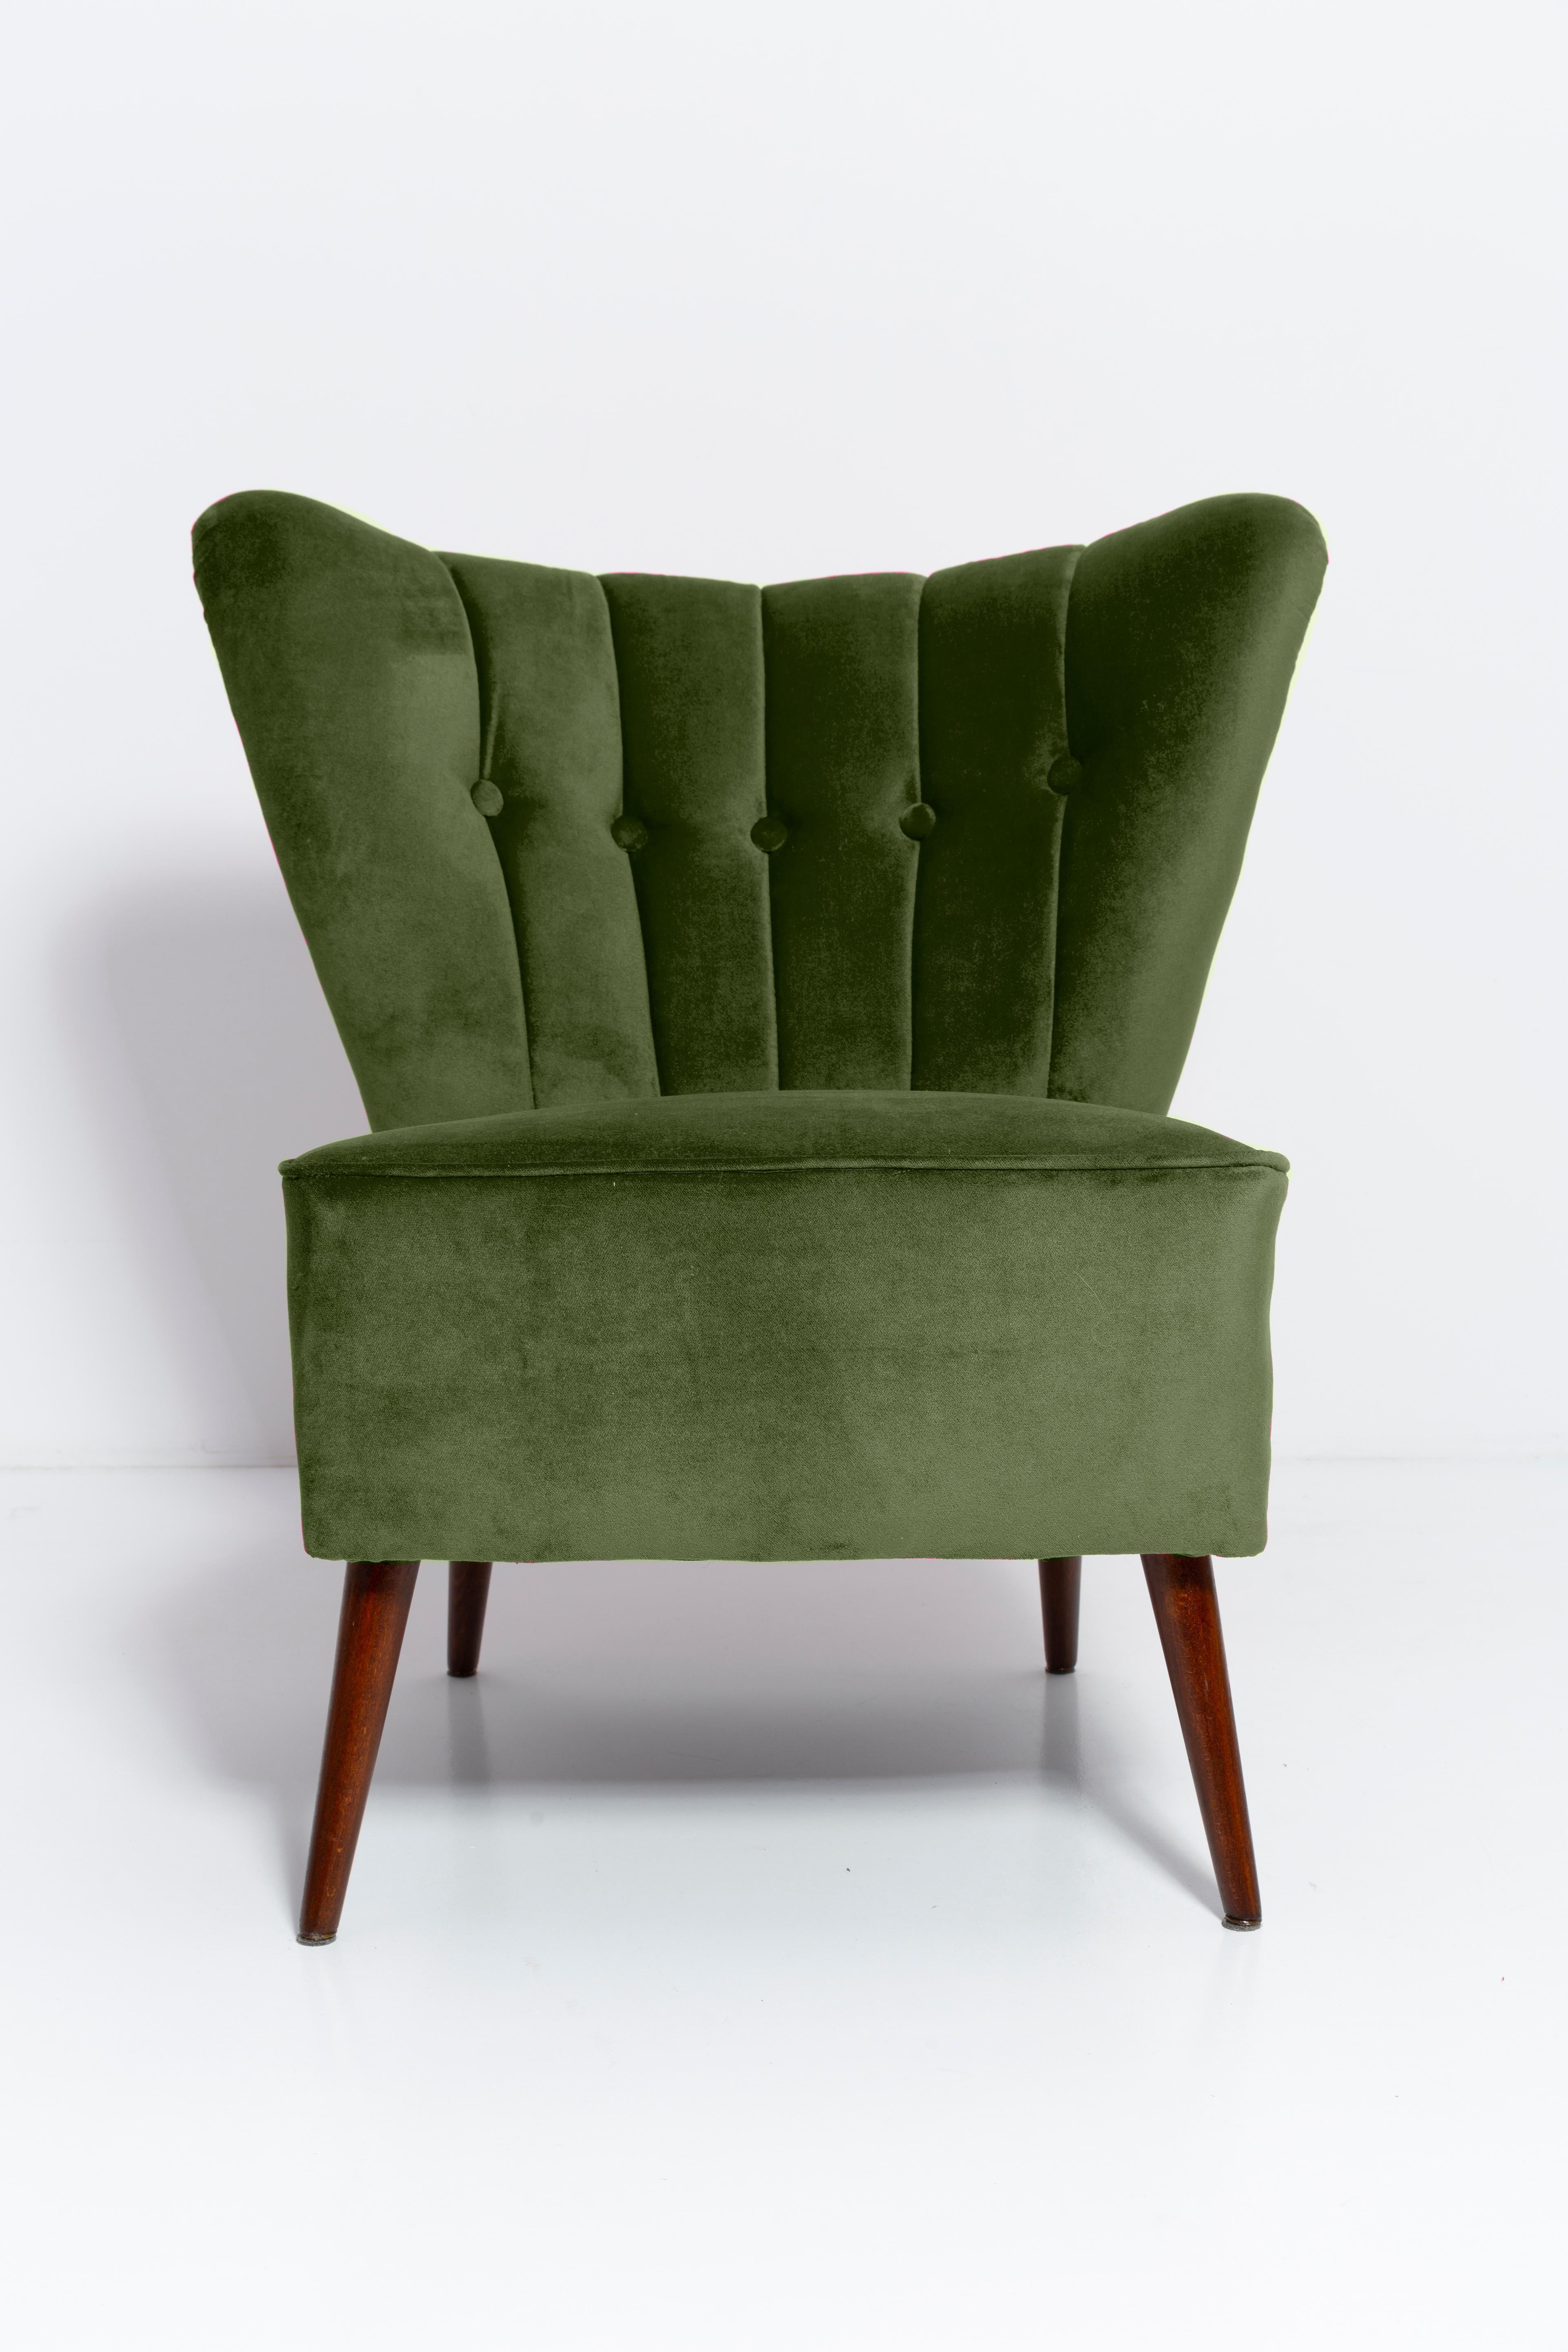 Midcentury Green Velvet Club Armchair, Europe, 1960s For Sale 2